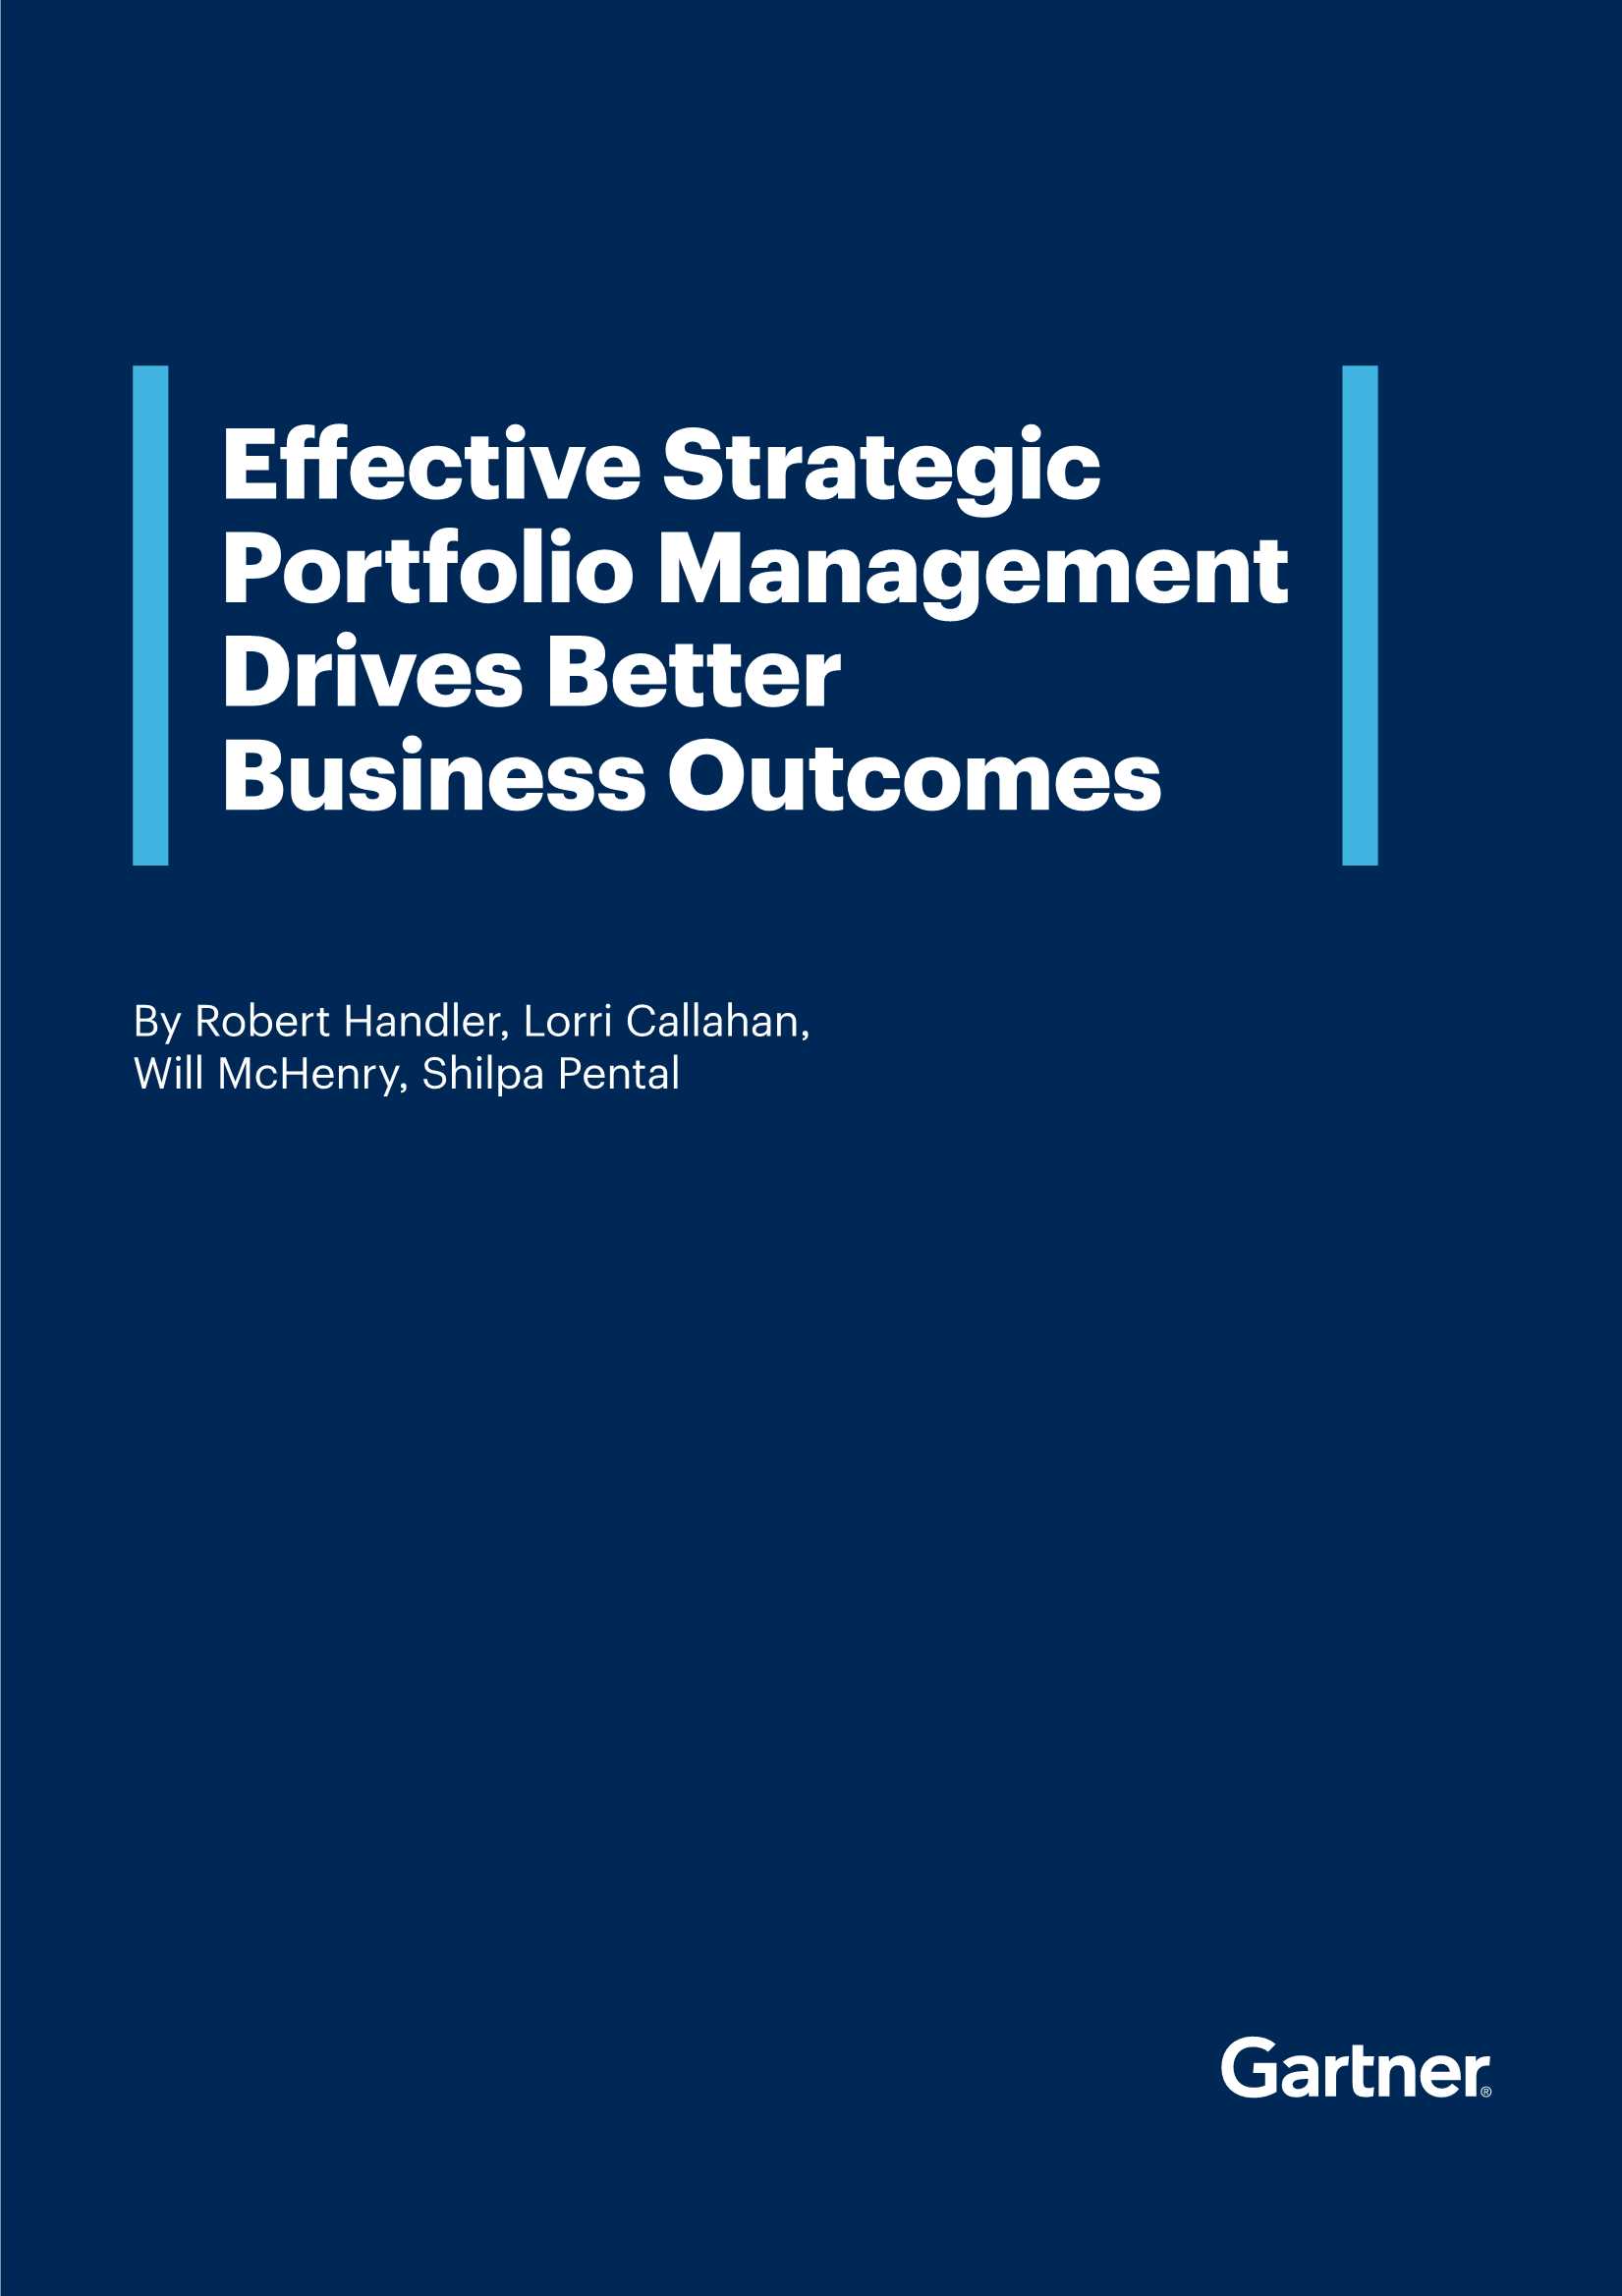 Gartner-有效的战略投资组合管理推动更好的业务成果（英）-2021.12-16页